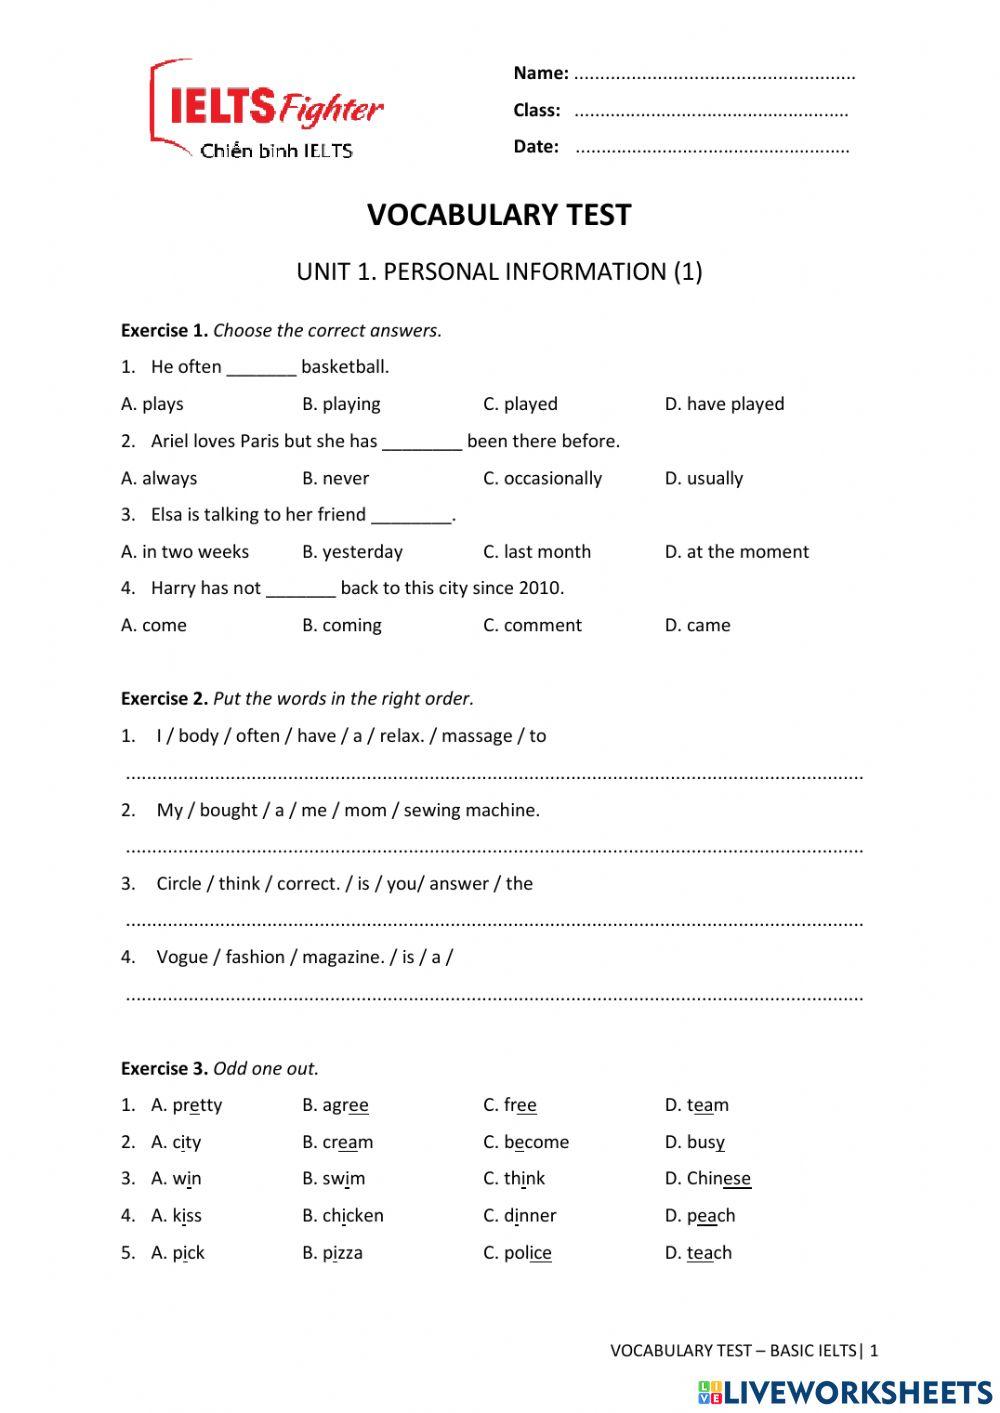 Vocab Test U1-BASIC IELTS